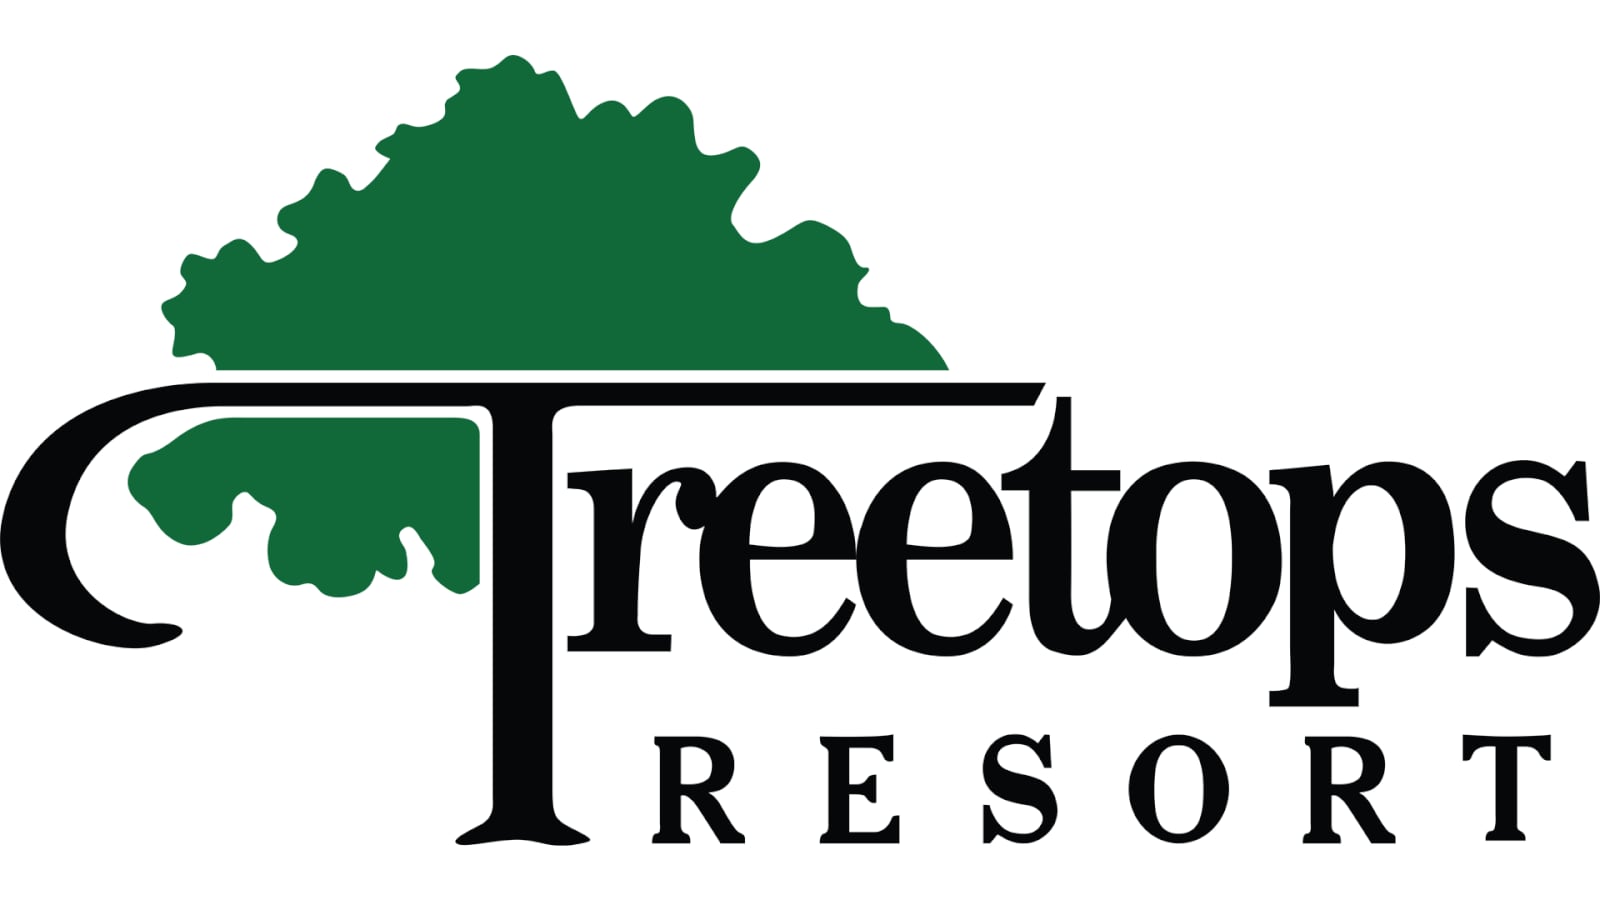 Treetops Resorts Giveaway!